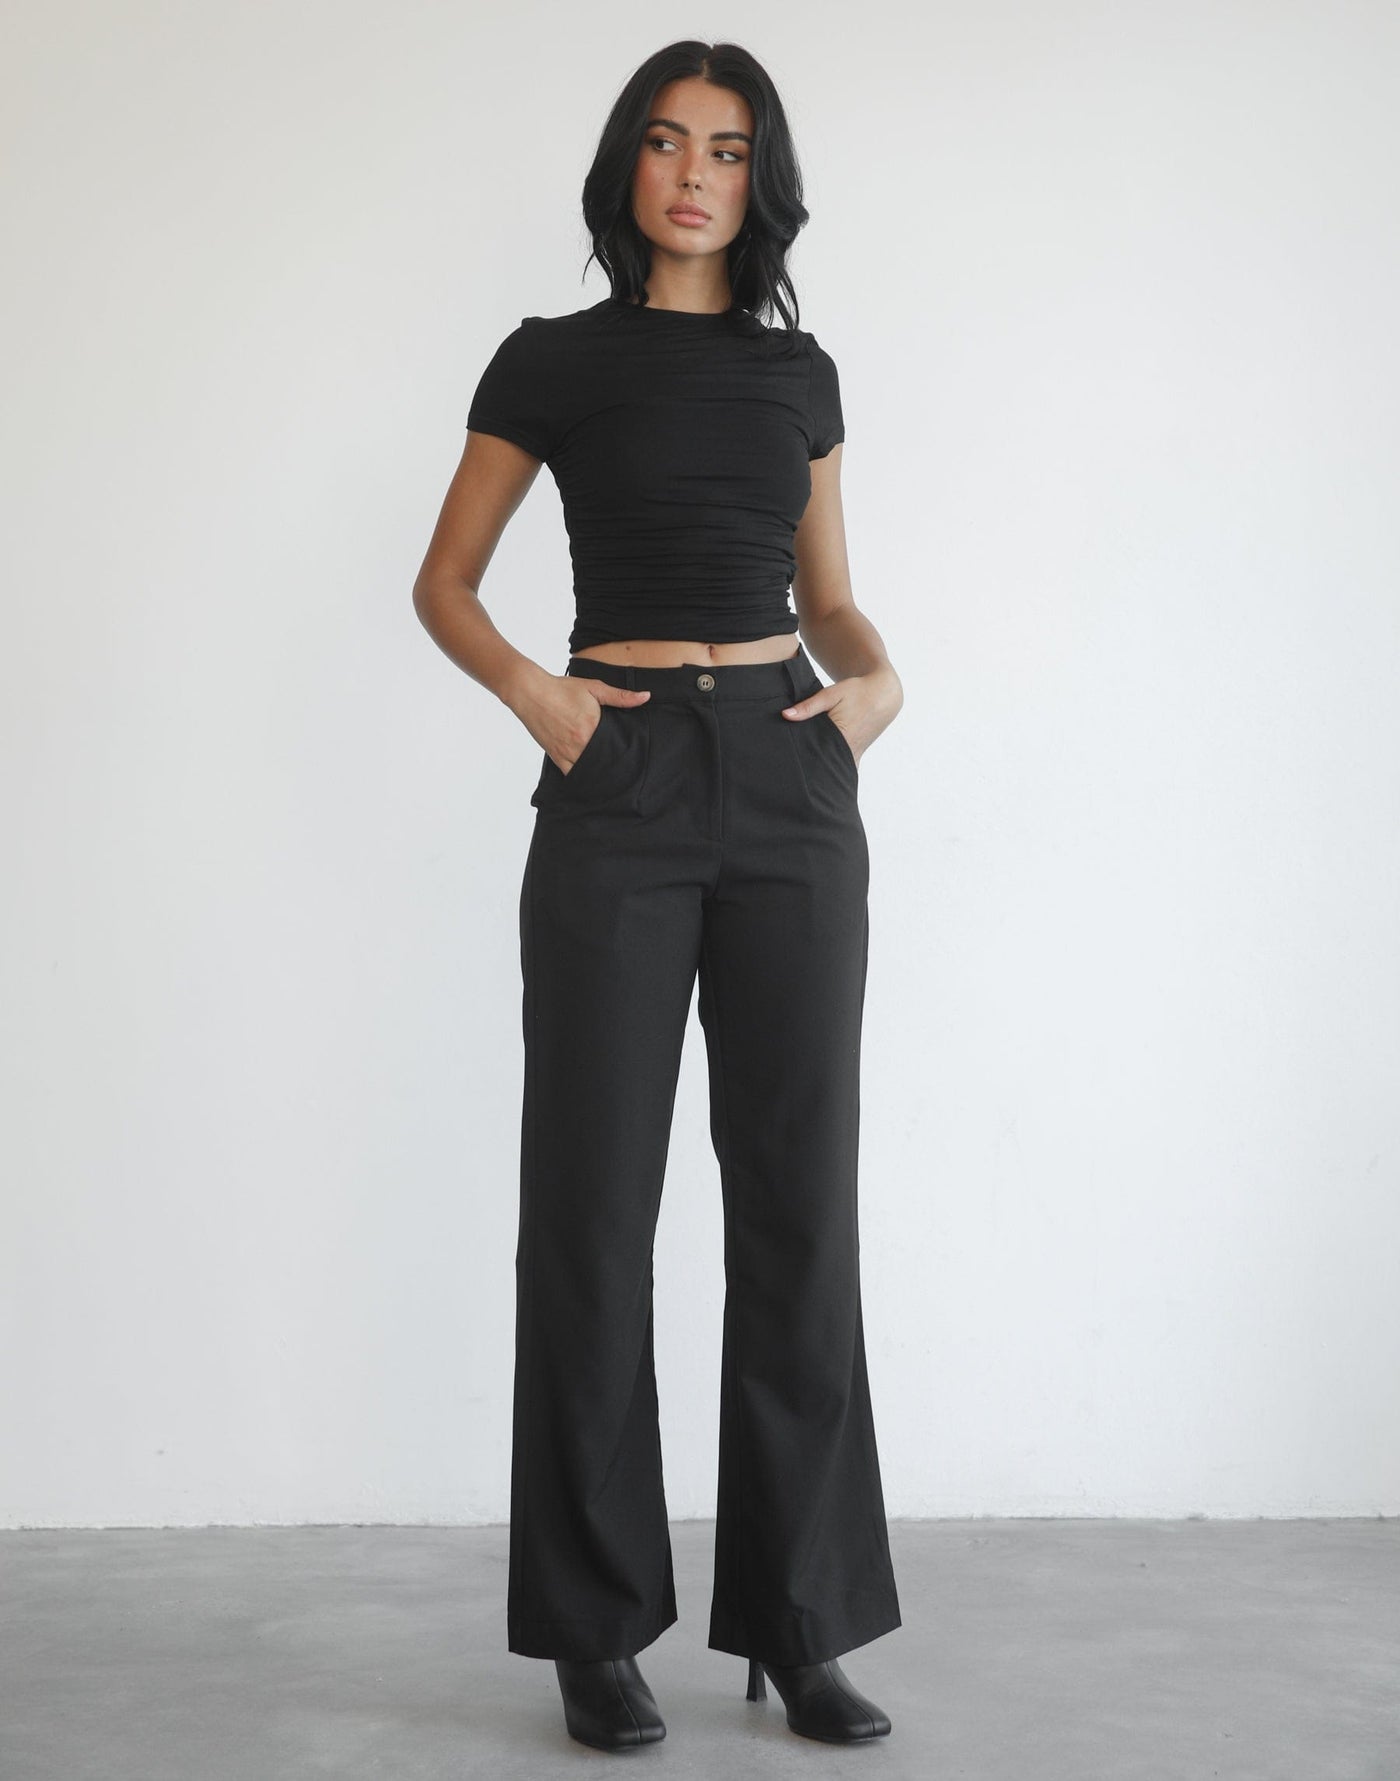 Essence Pants (Black) - Wide Leg Pants - Women's Pants - Charcoal Clothing